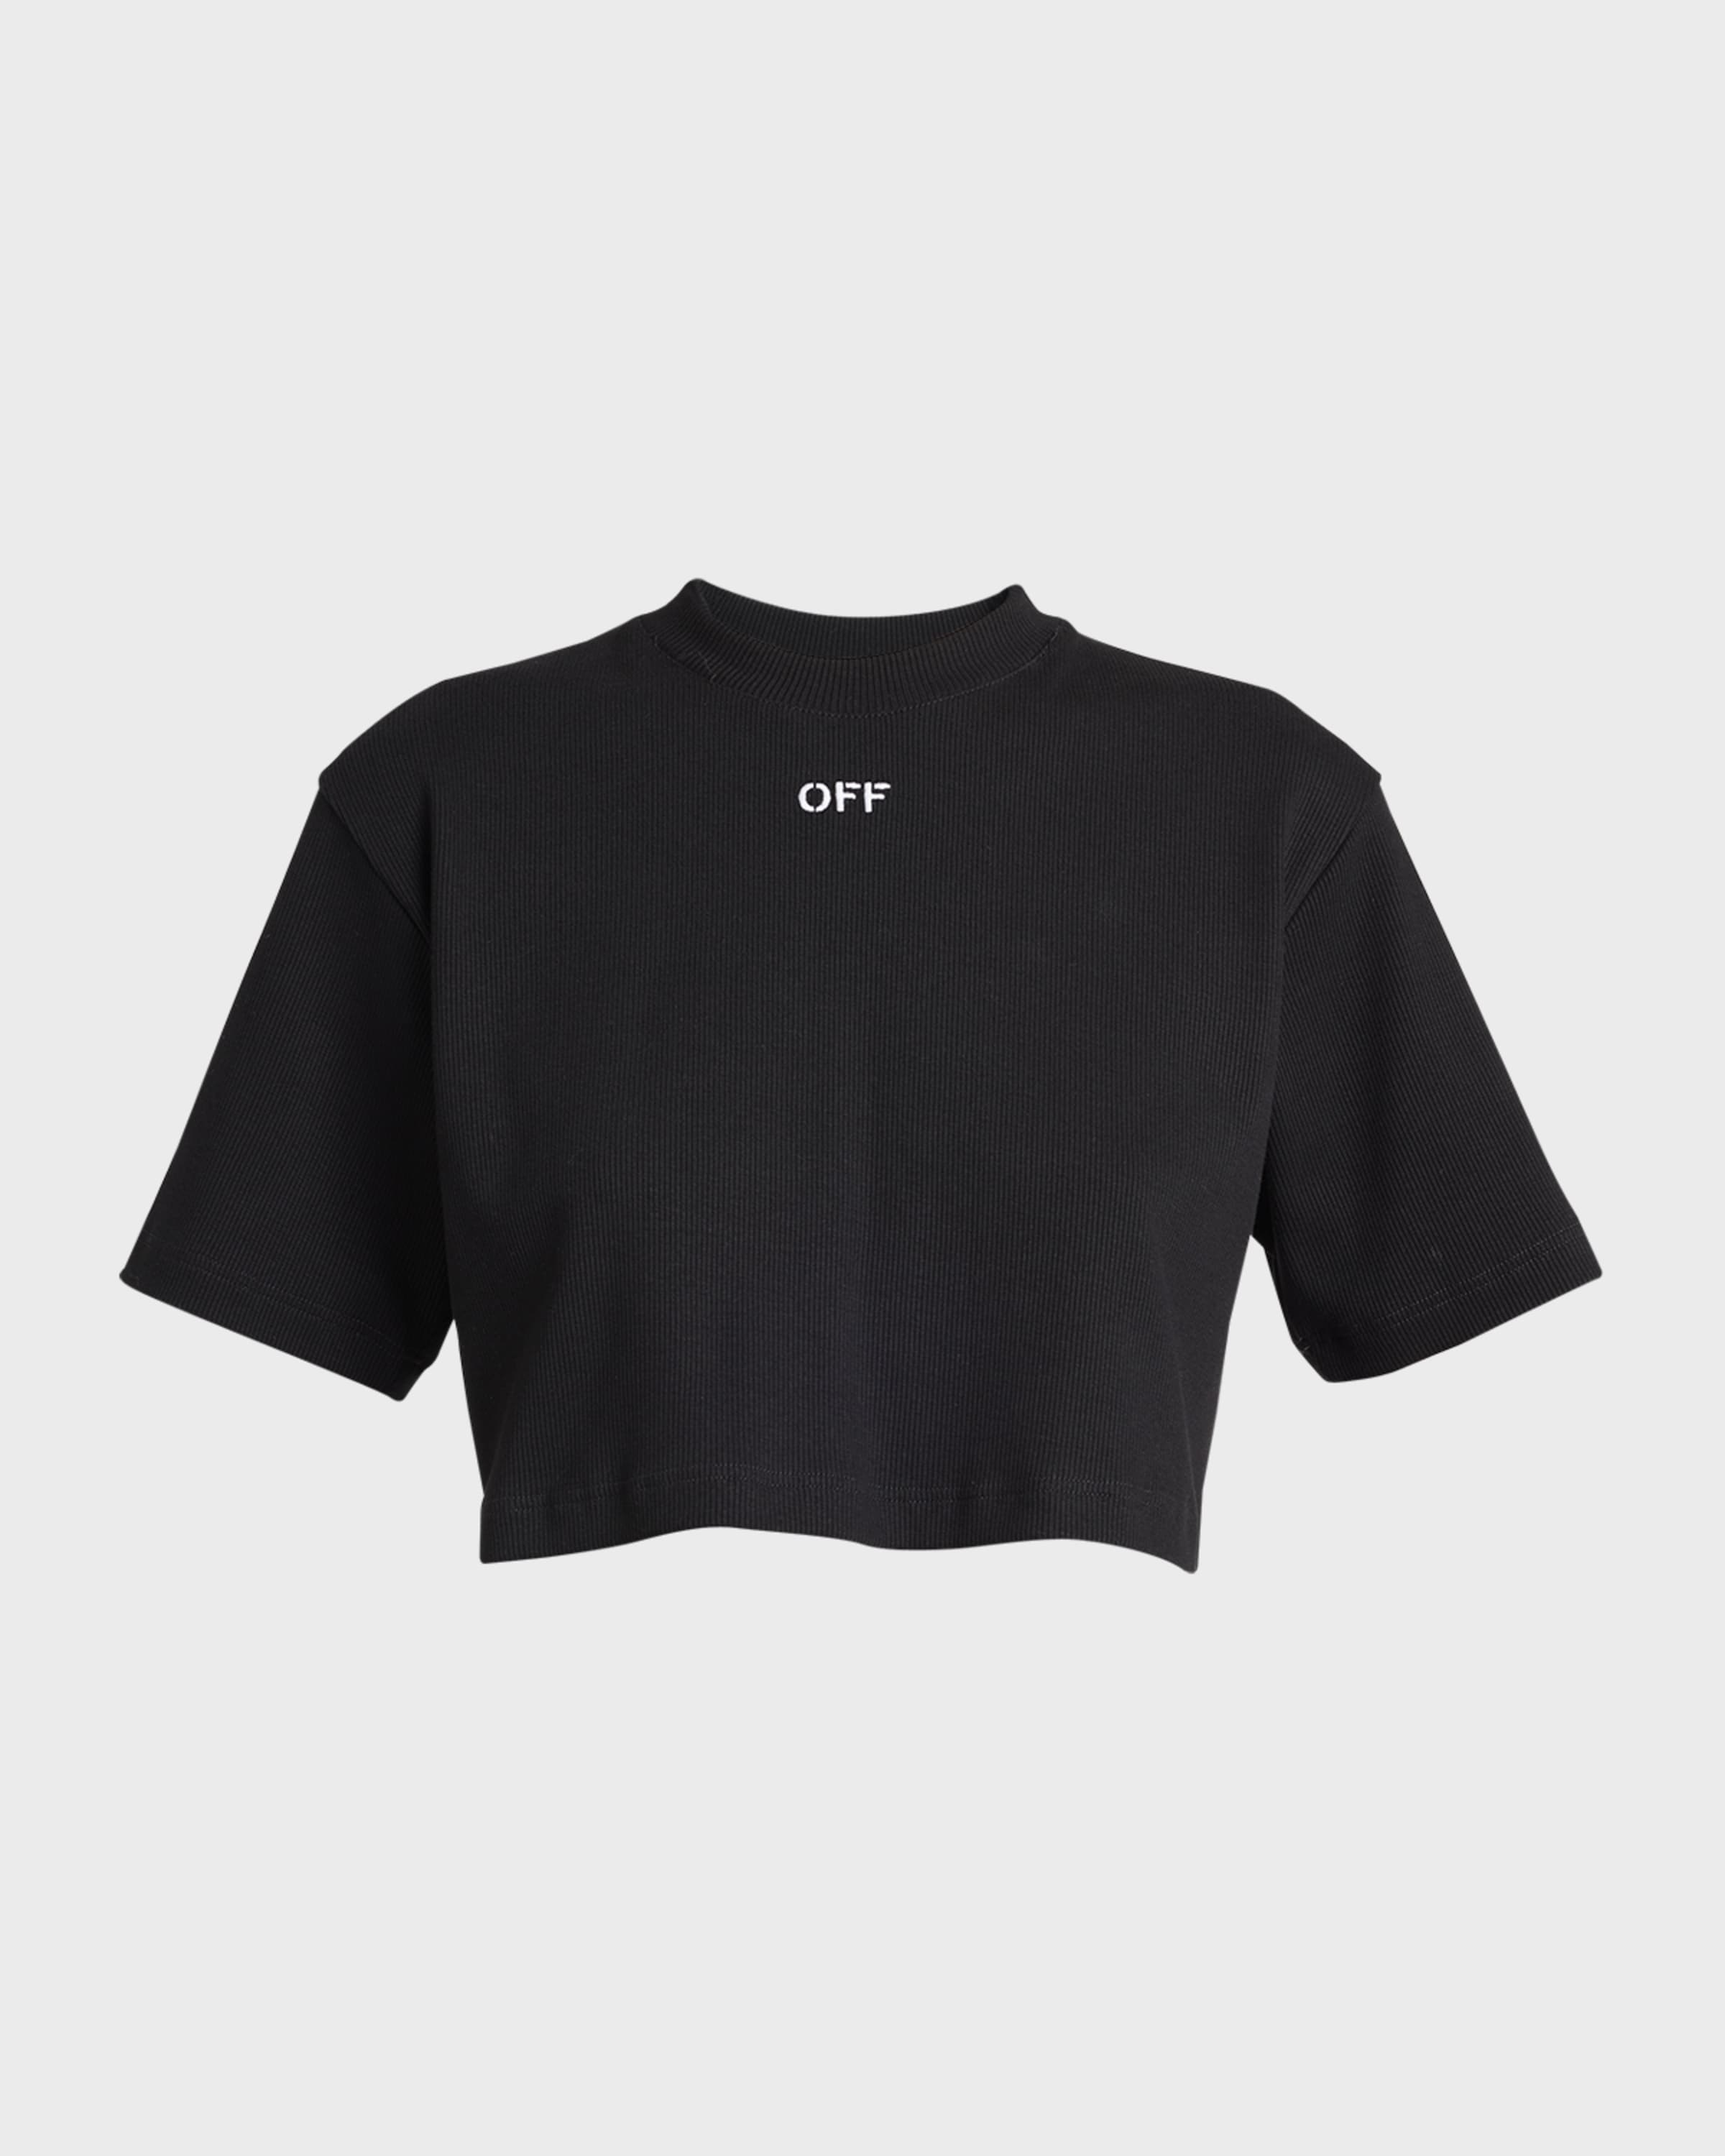 Off Stamp Rib Crop T-Shirt - 1